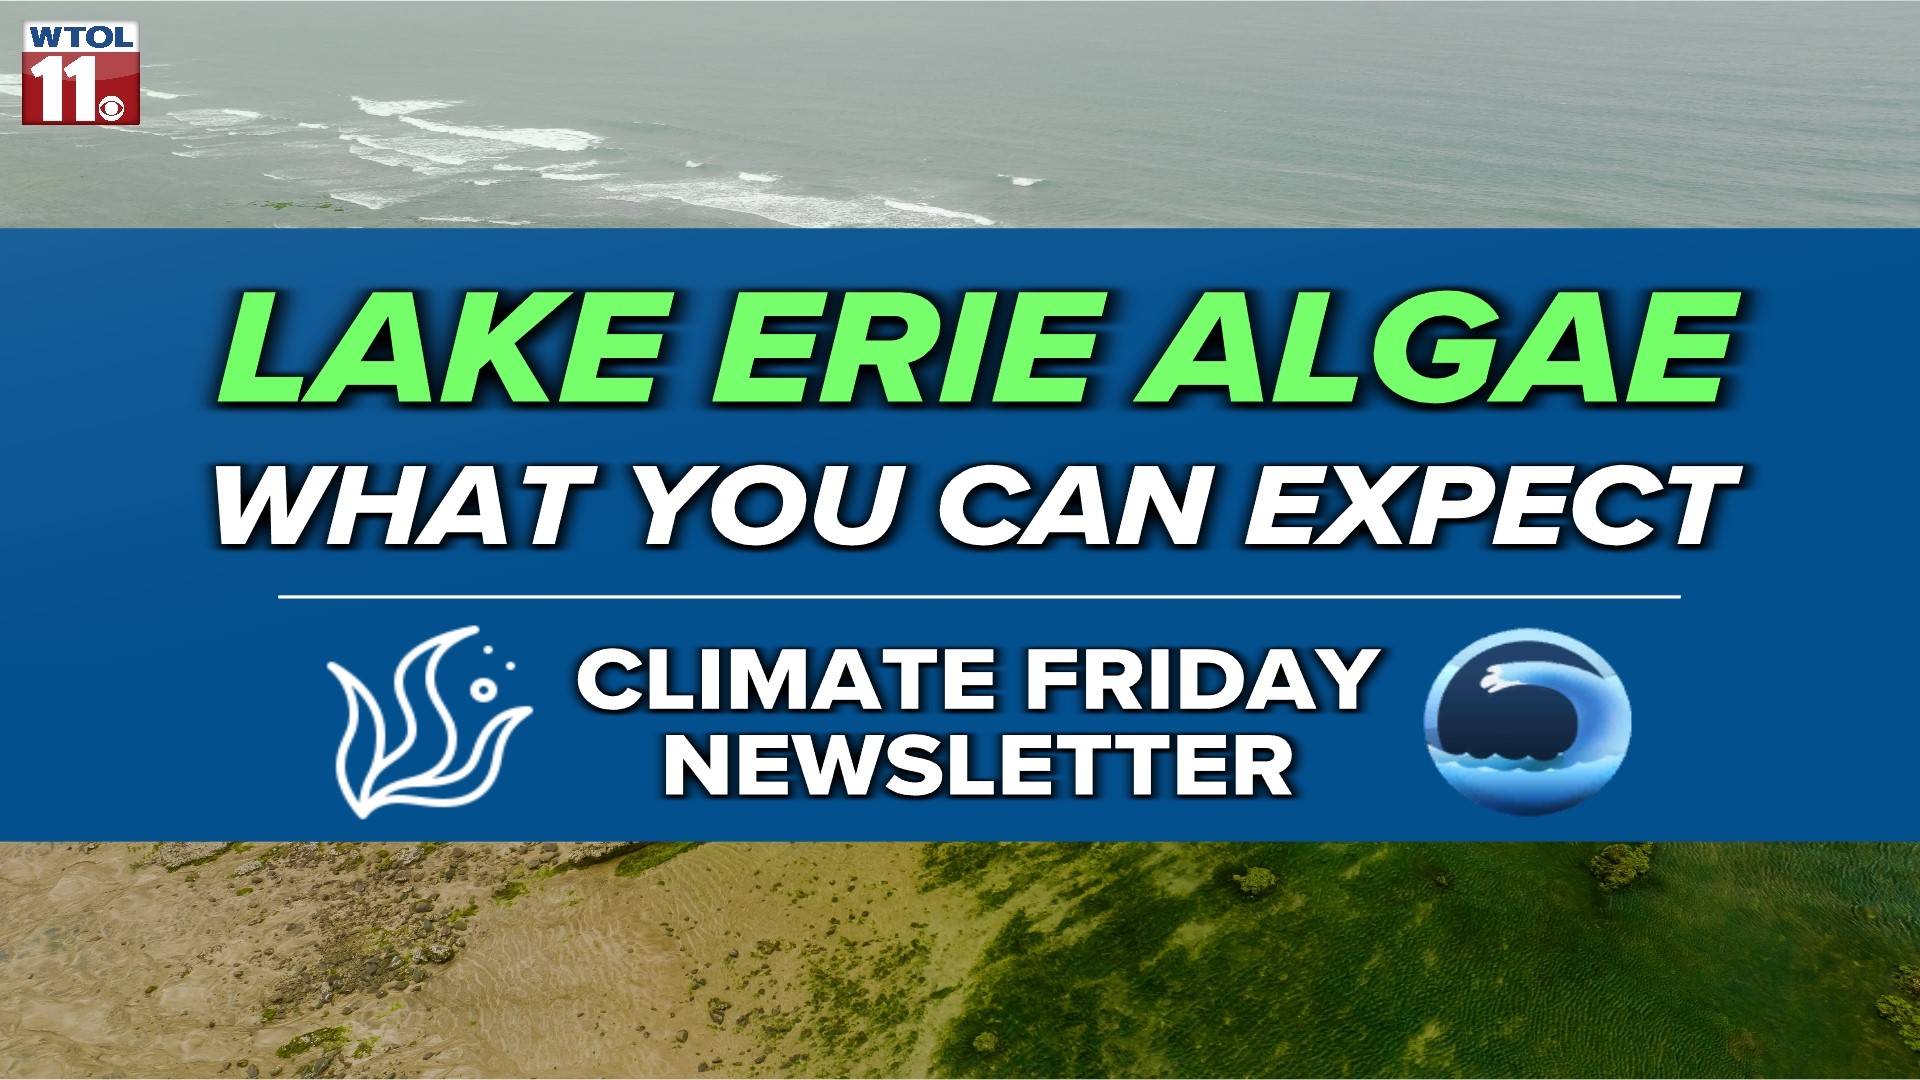 WTOL 11 Meteorologist John Burchfield walks you through the latest data and information on the Lake Erie harmful algal bloom.